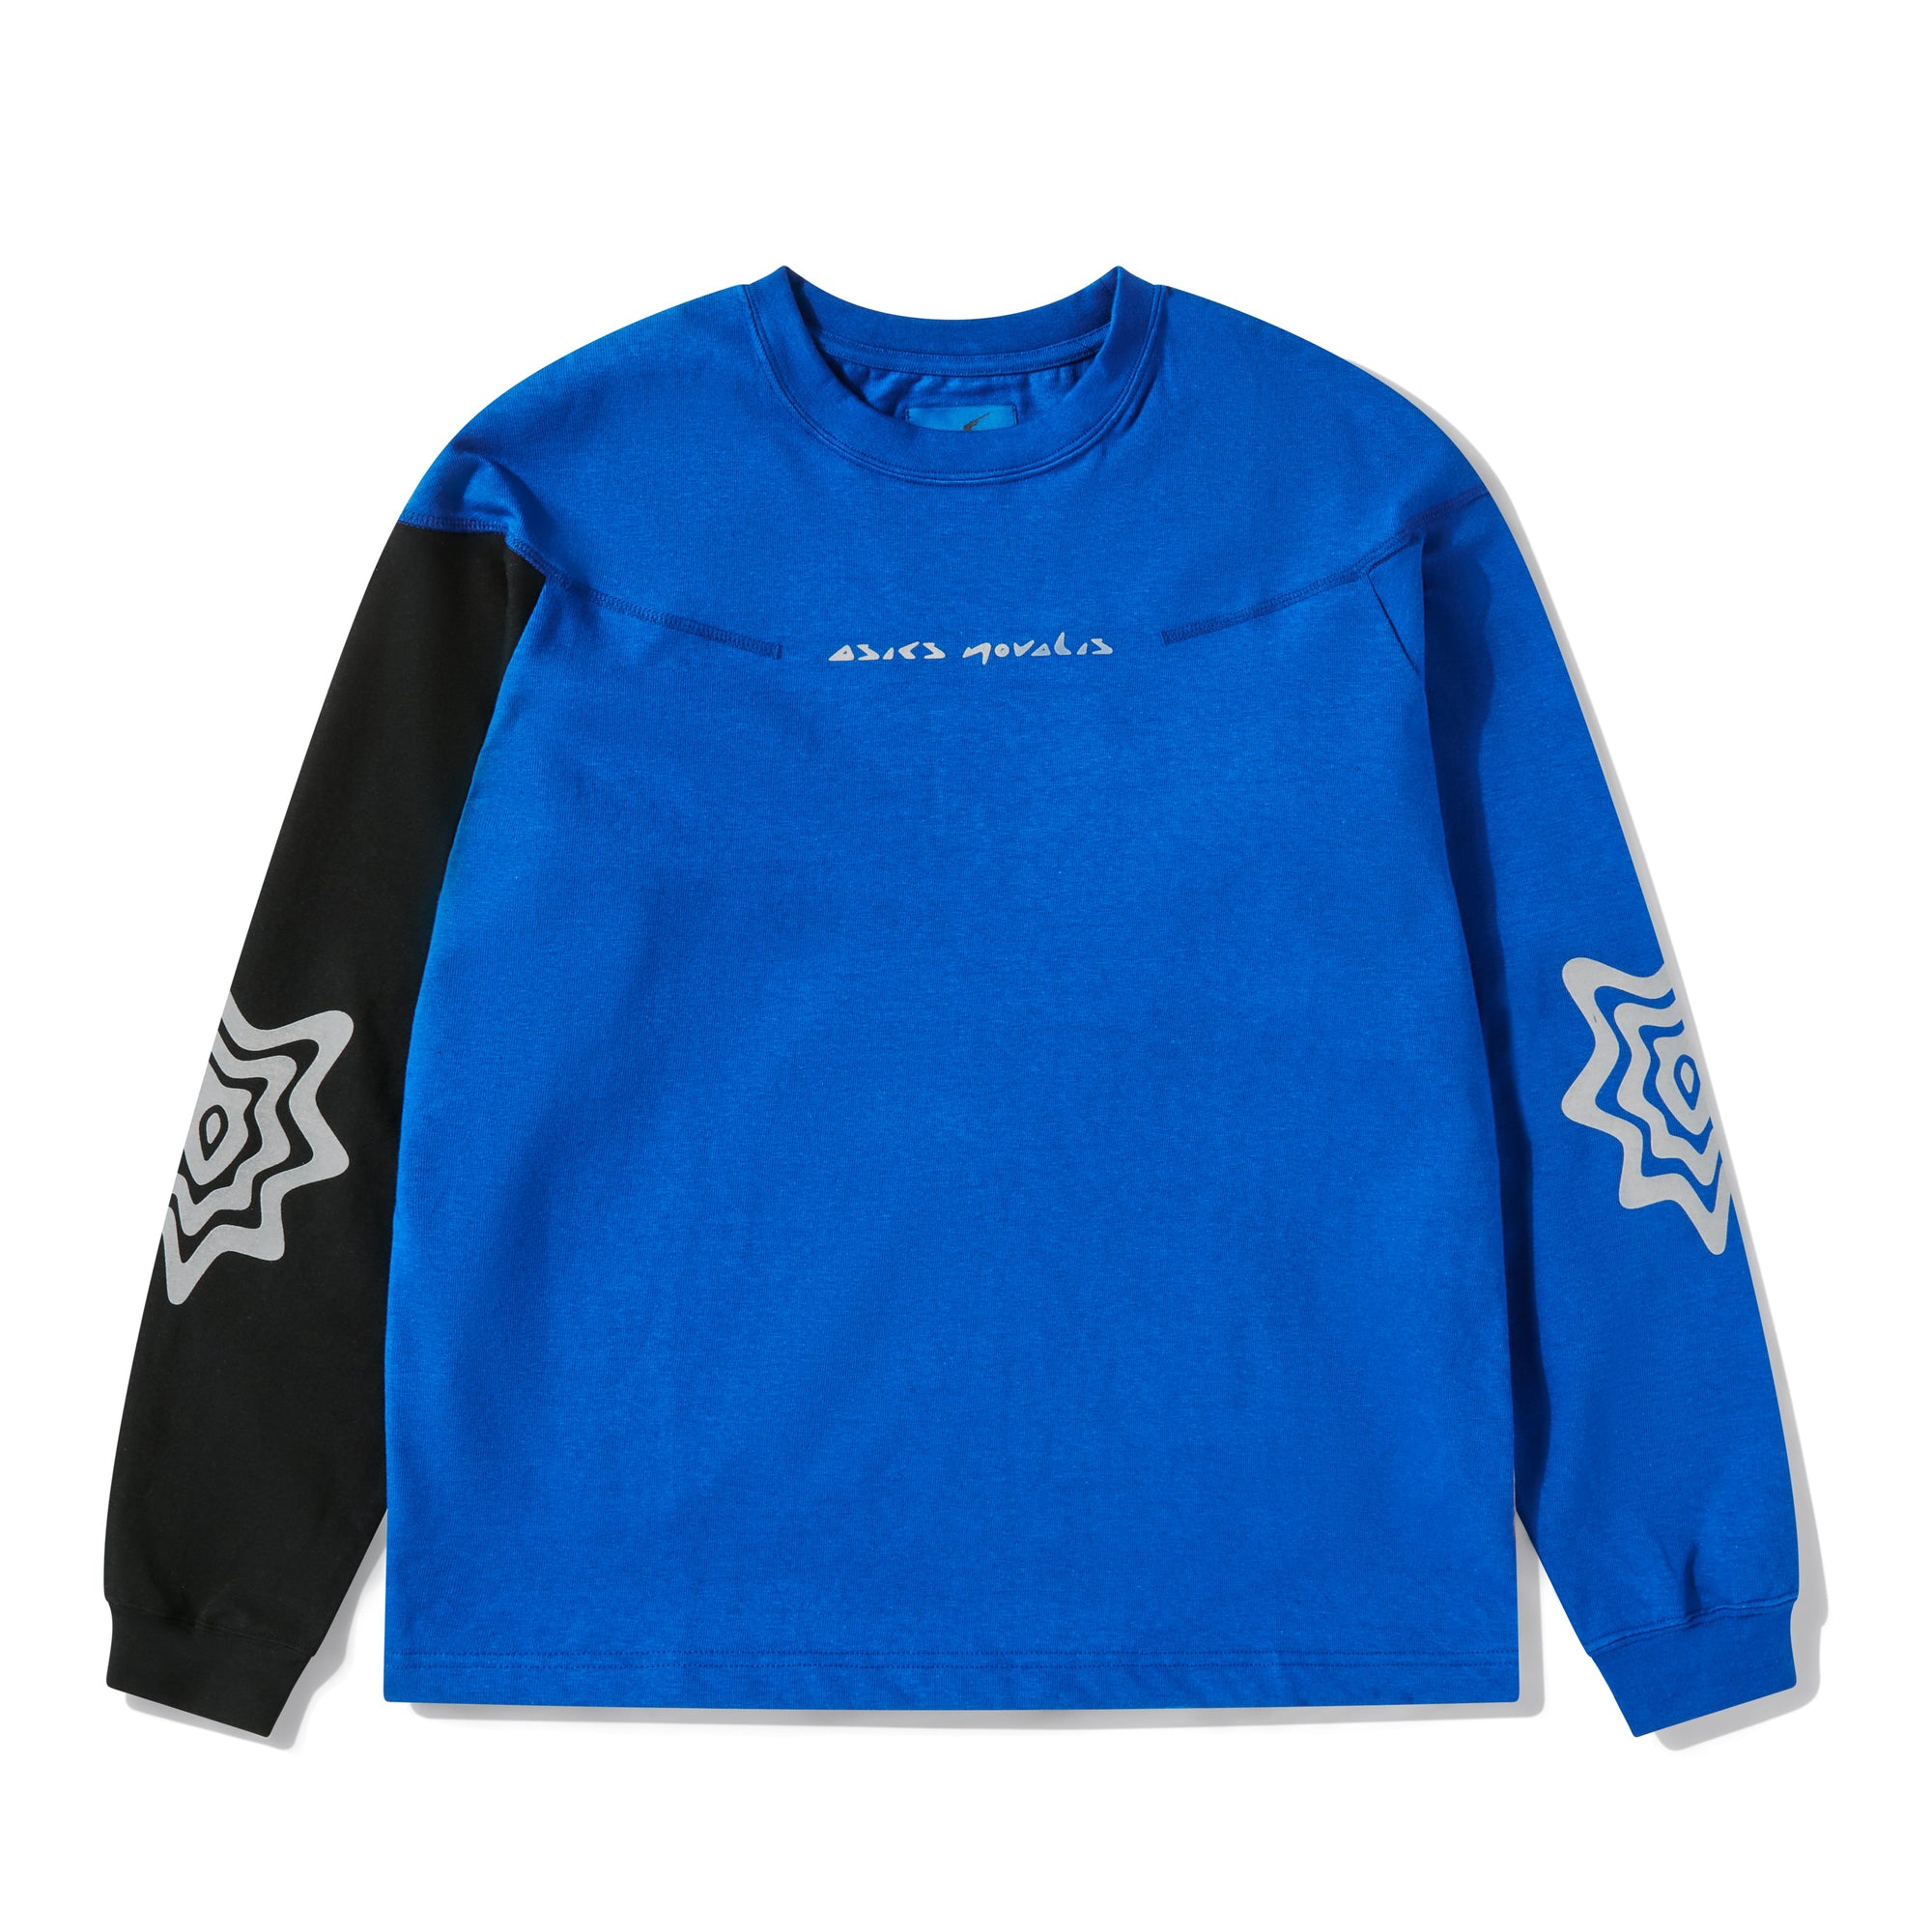 Asics Novalis - Bixance Long Sleeve T-Shirt - (Asics Blue / Obsidian Black) view 1